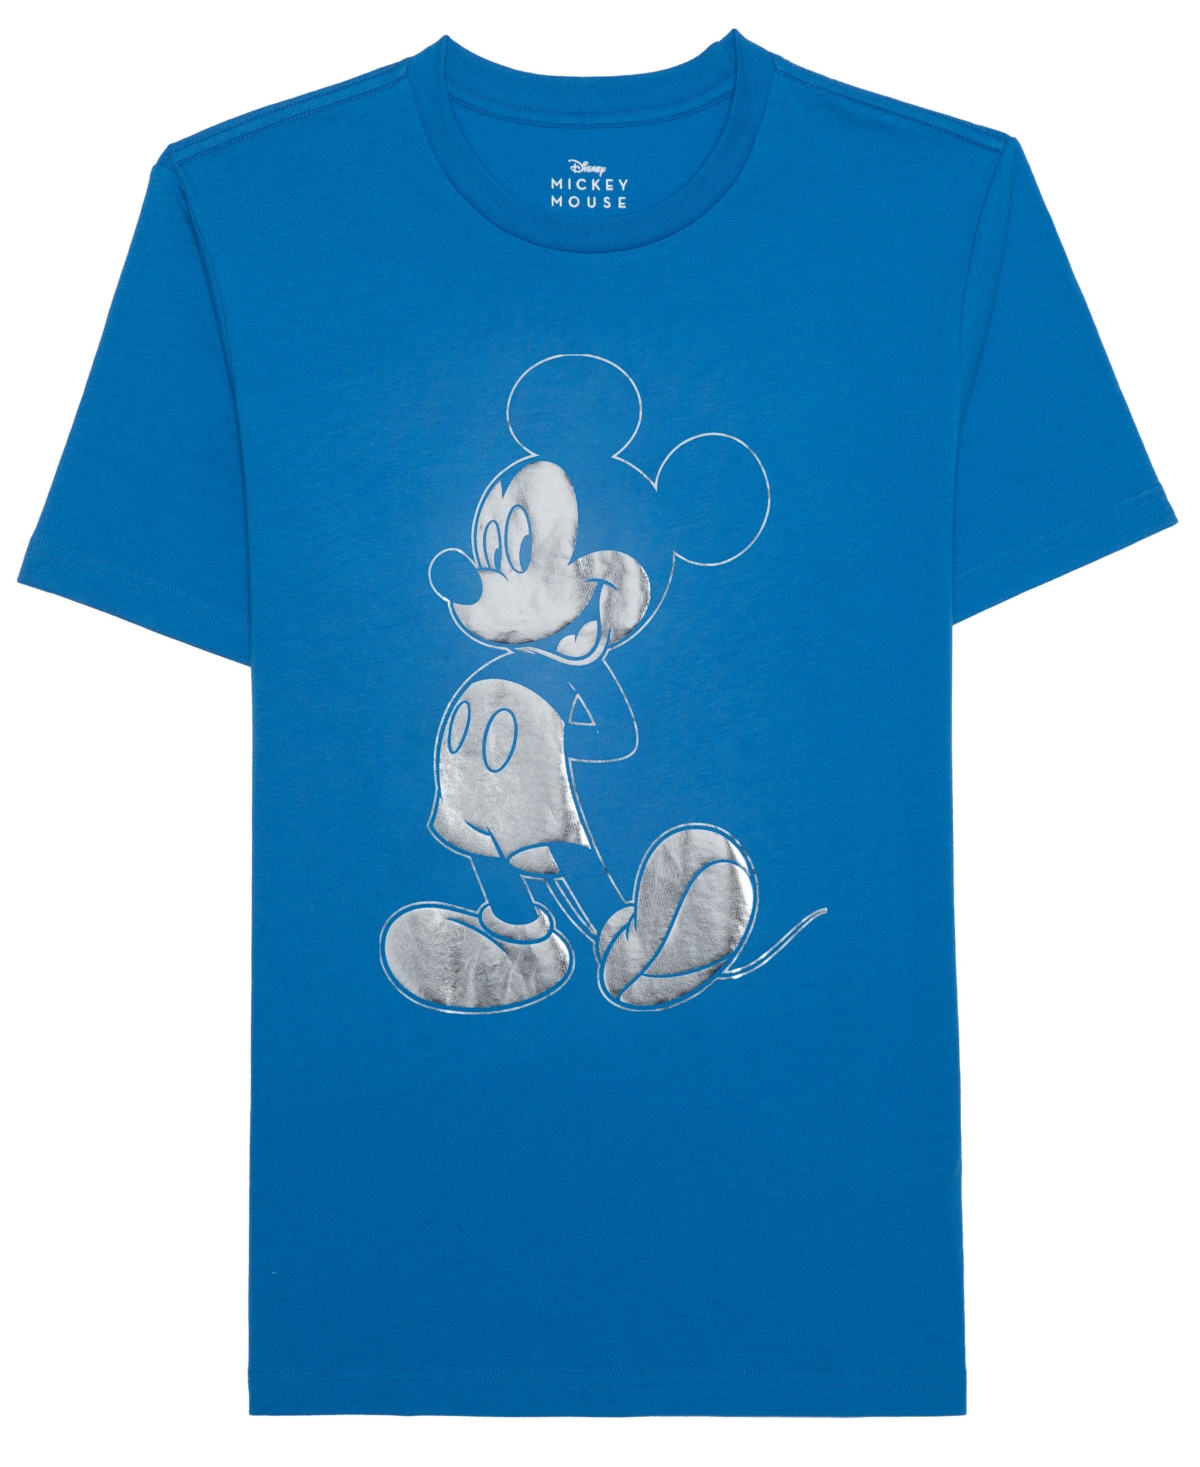 Mickey Mouse Foil Men's Short Sleeve T-Shirt - Royal Blue